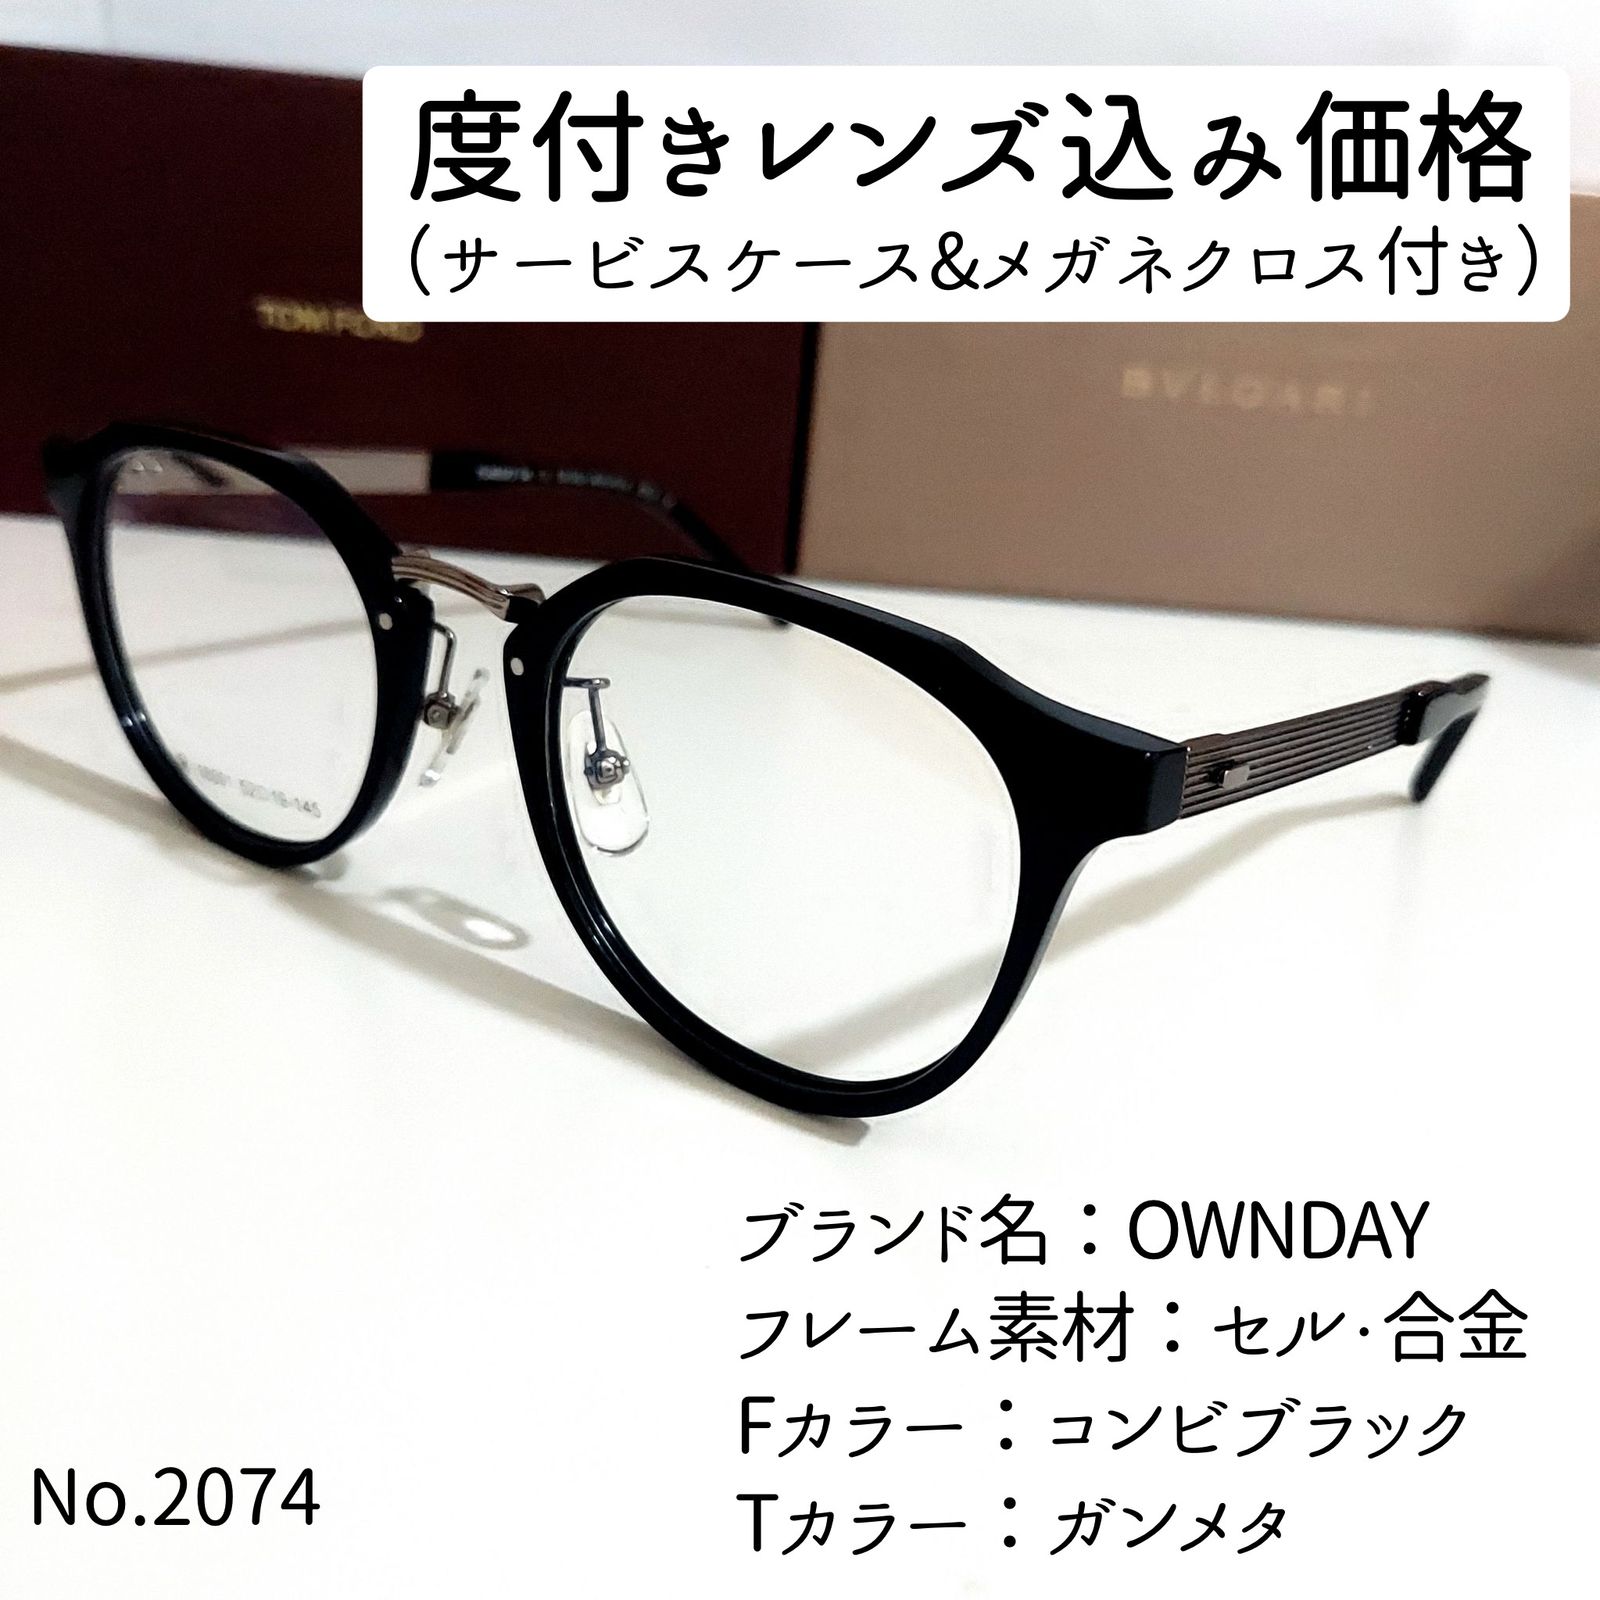 No.2074-メガネ OWNDAYSコンビ【フレームのみ価格】 - サングラス/メガネ